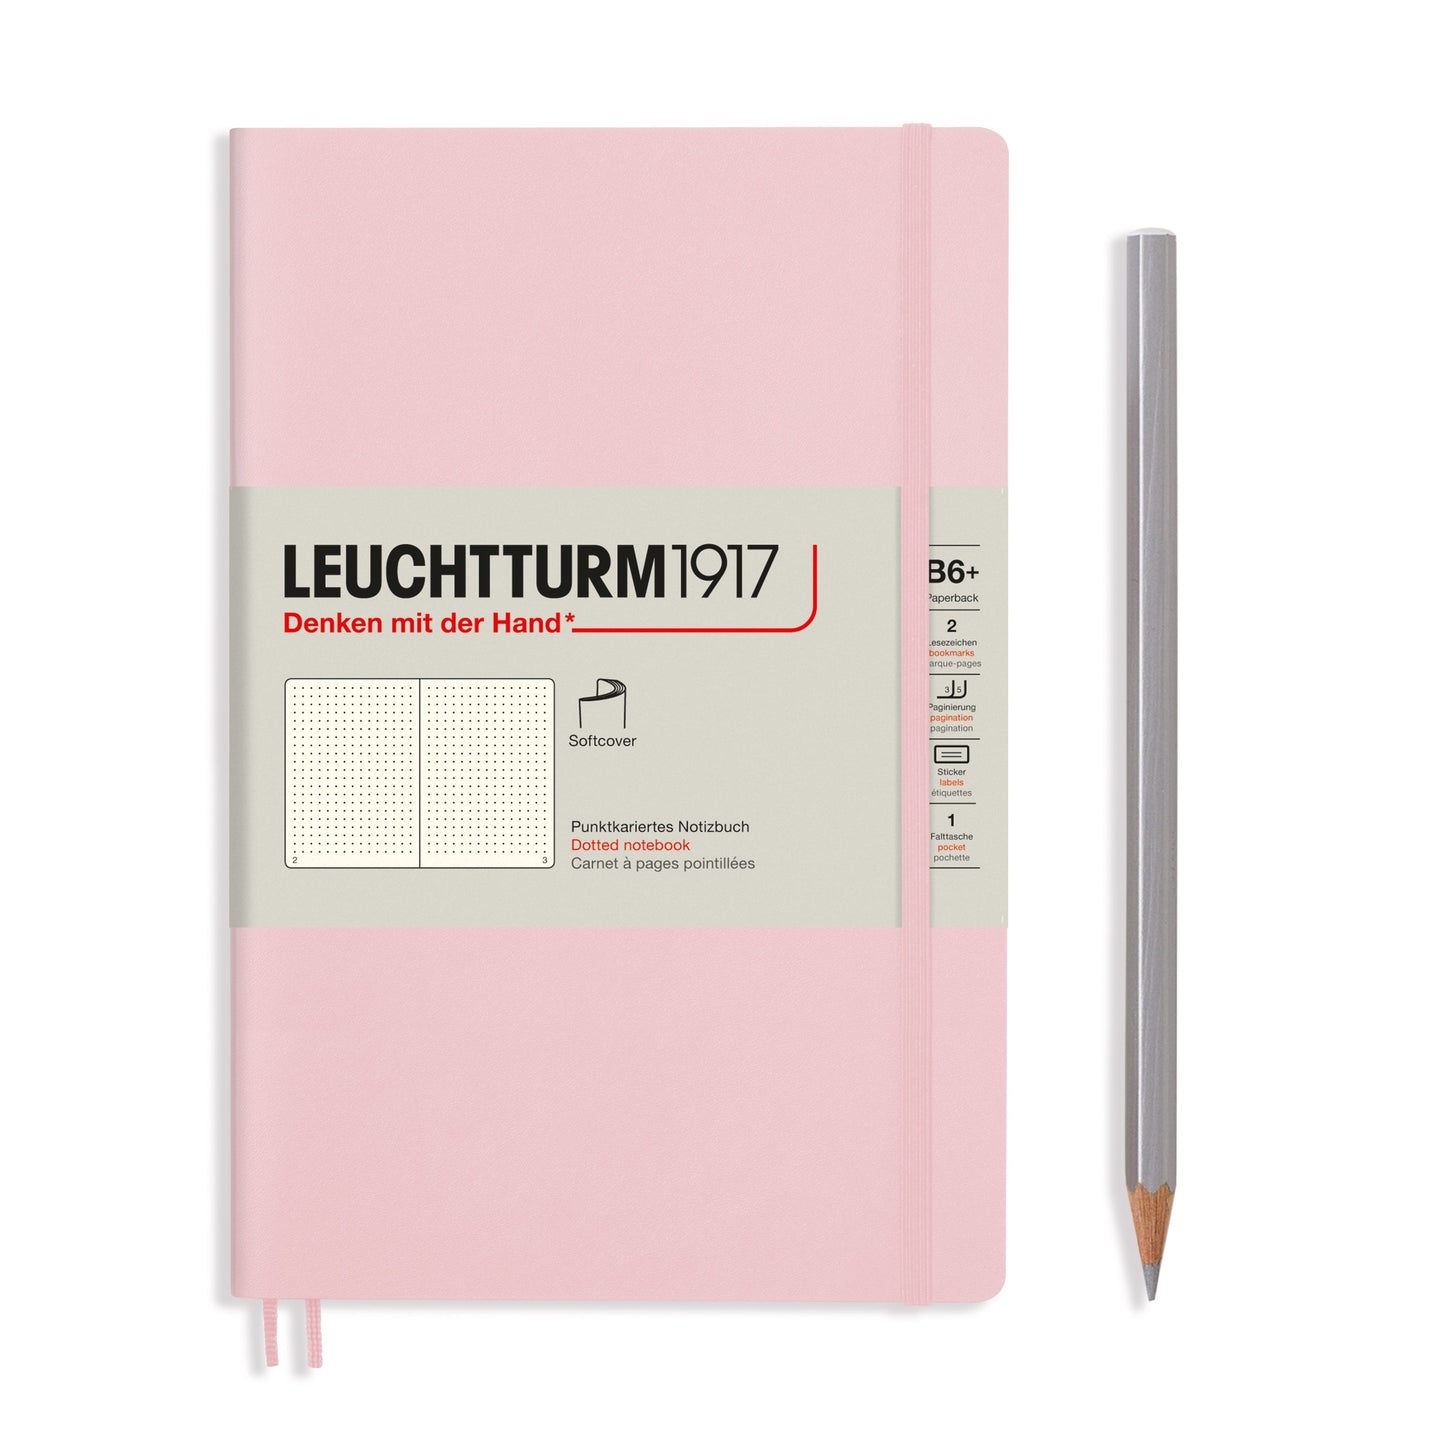 Leuchtturm1917 B6+ Softcover Notebook in Powder